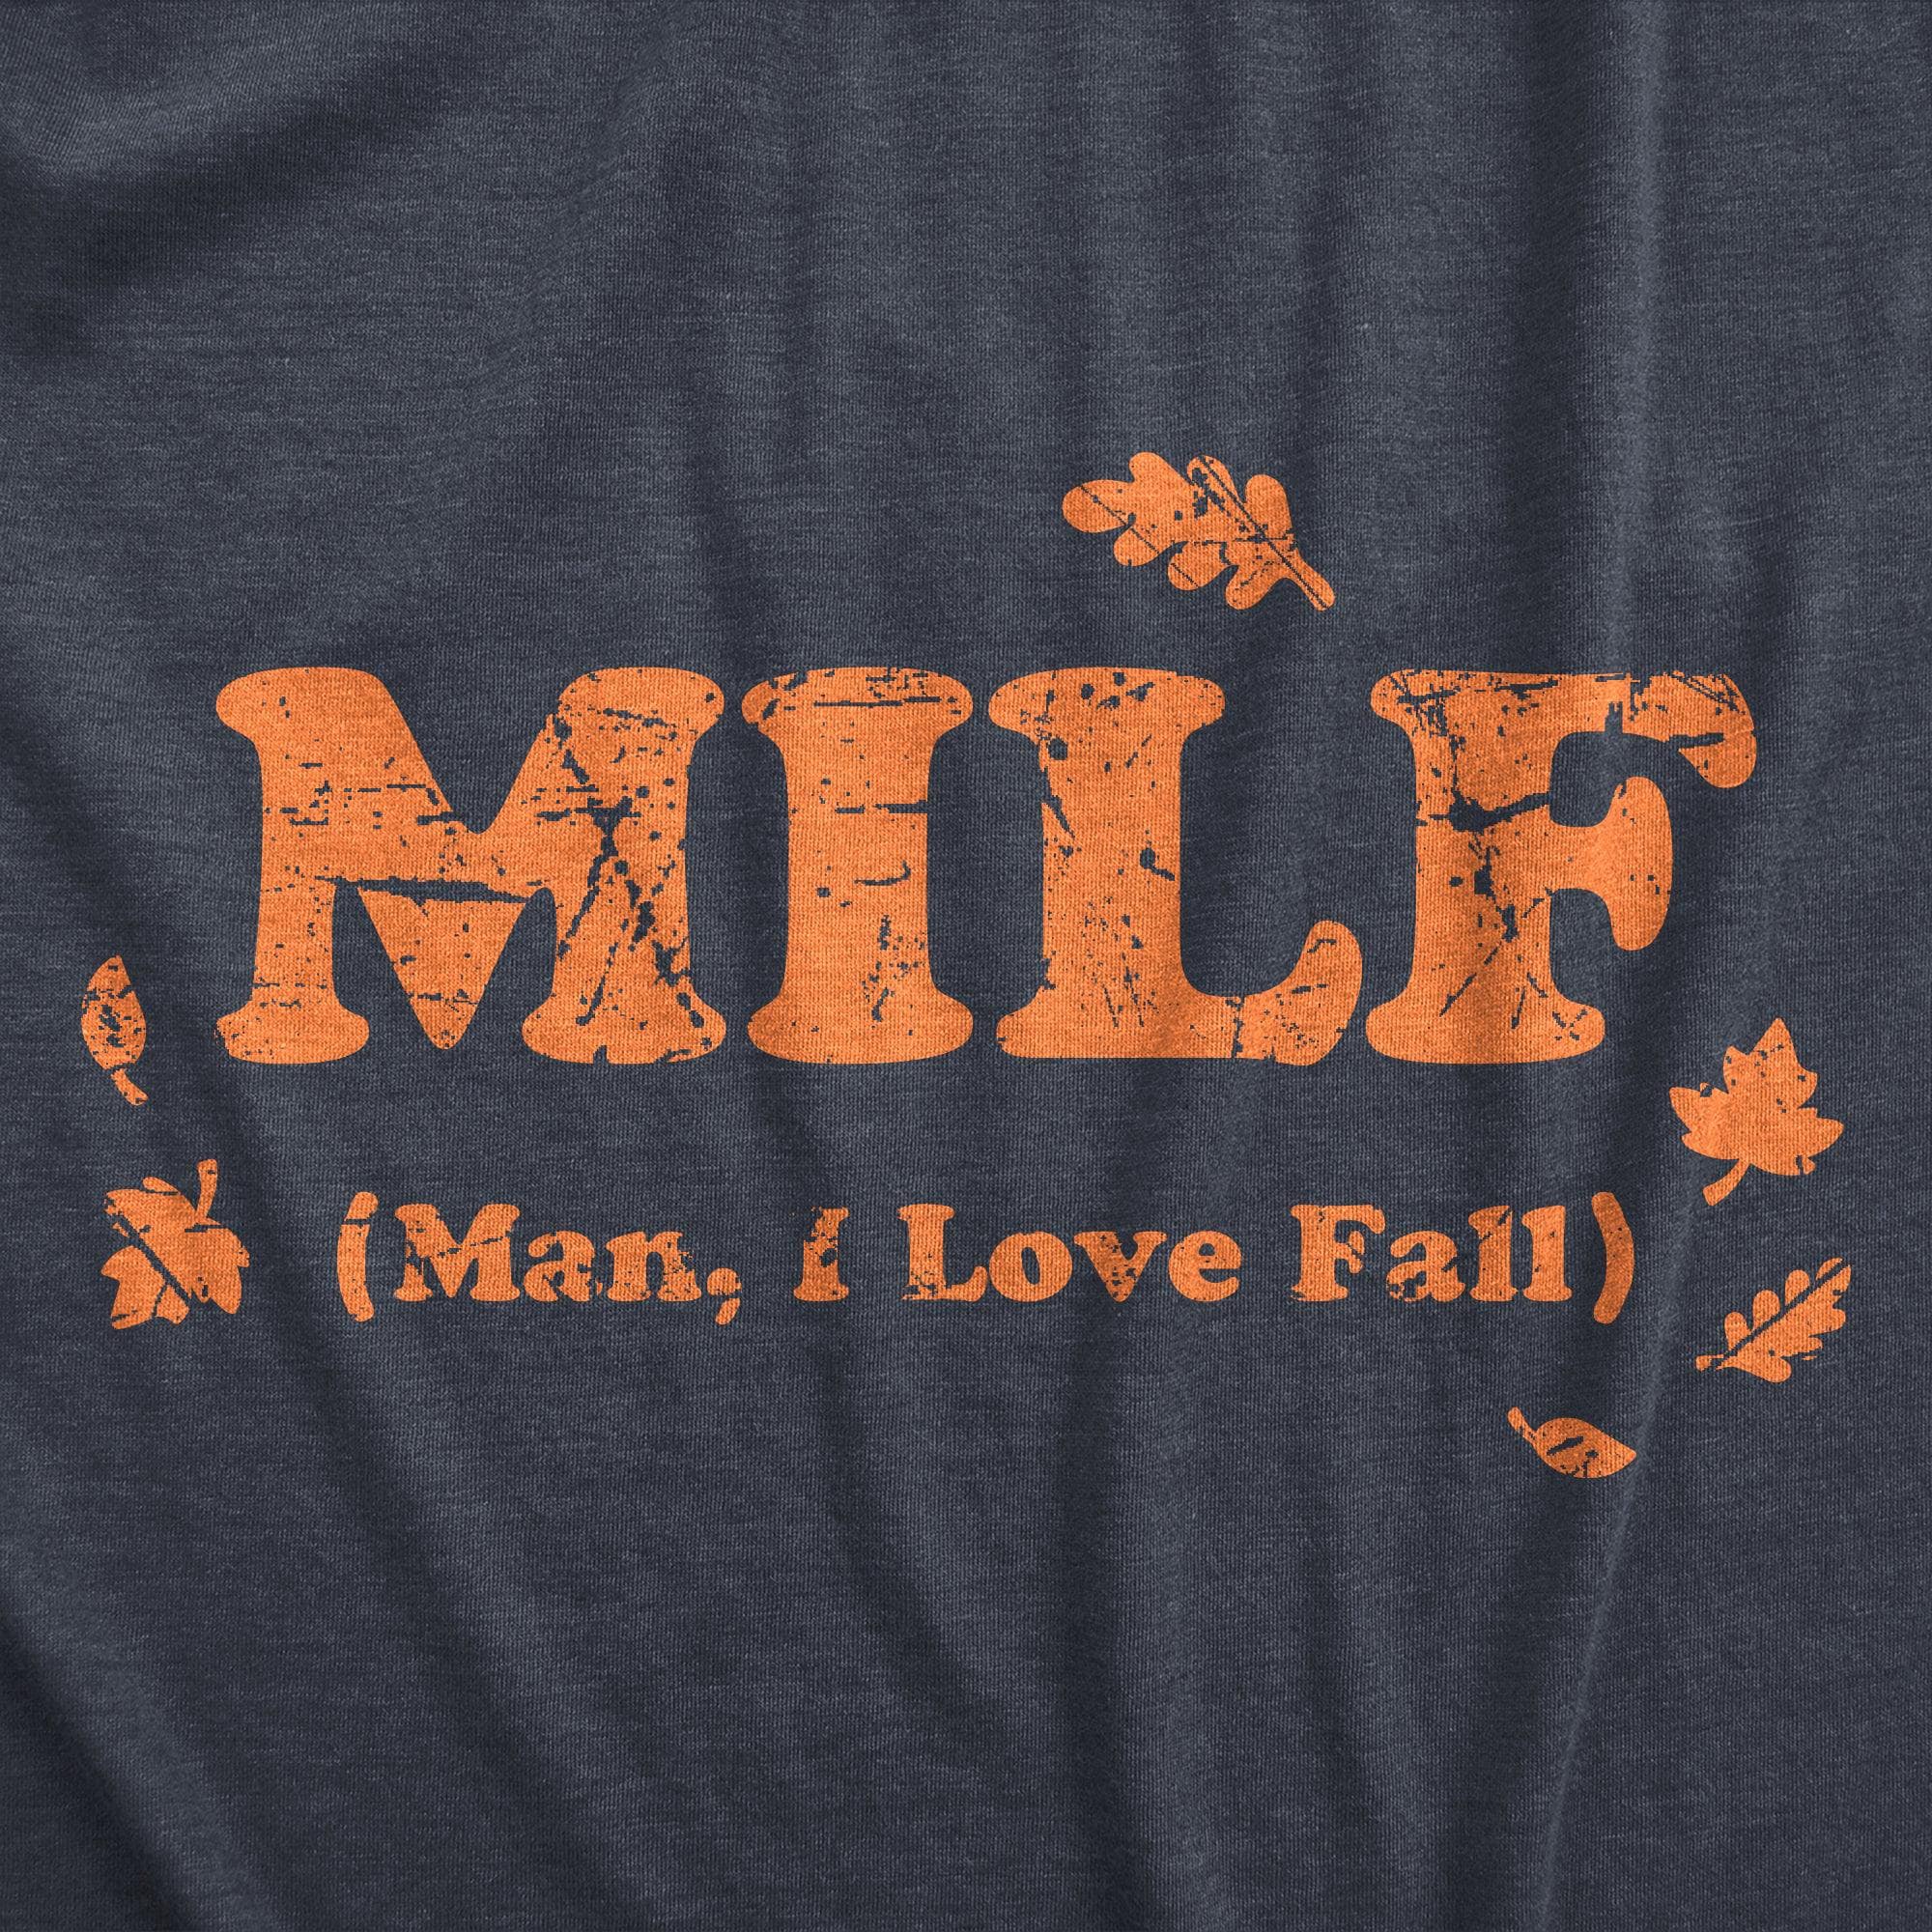 MILF Man I Love Fall Women's Tshirt  -  Crazy Dog T-Shirts